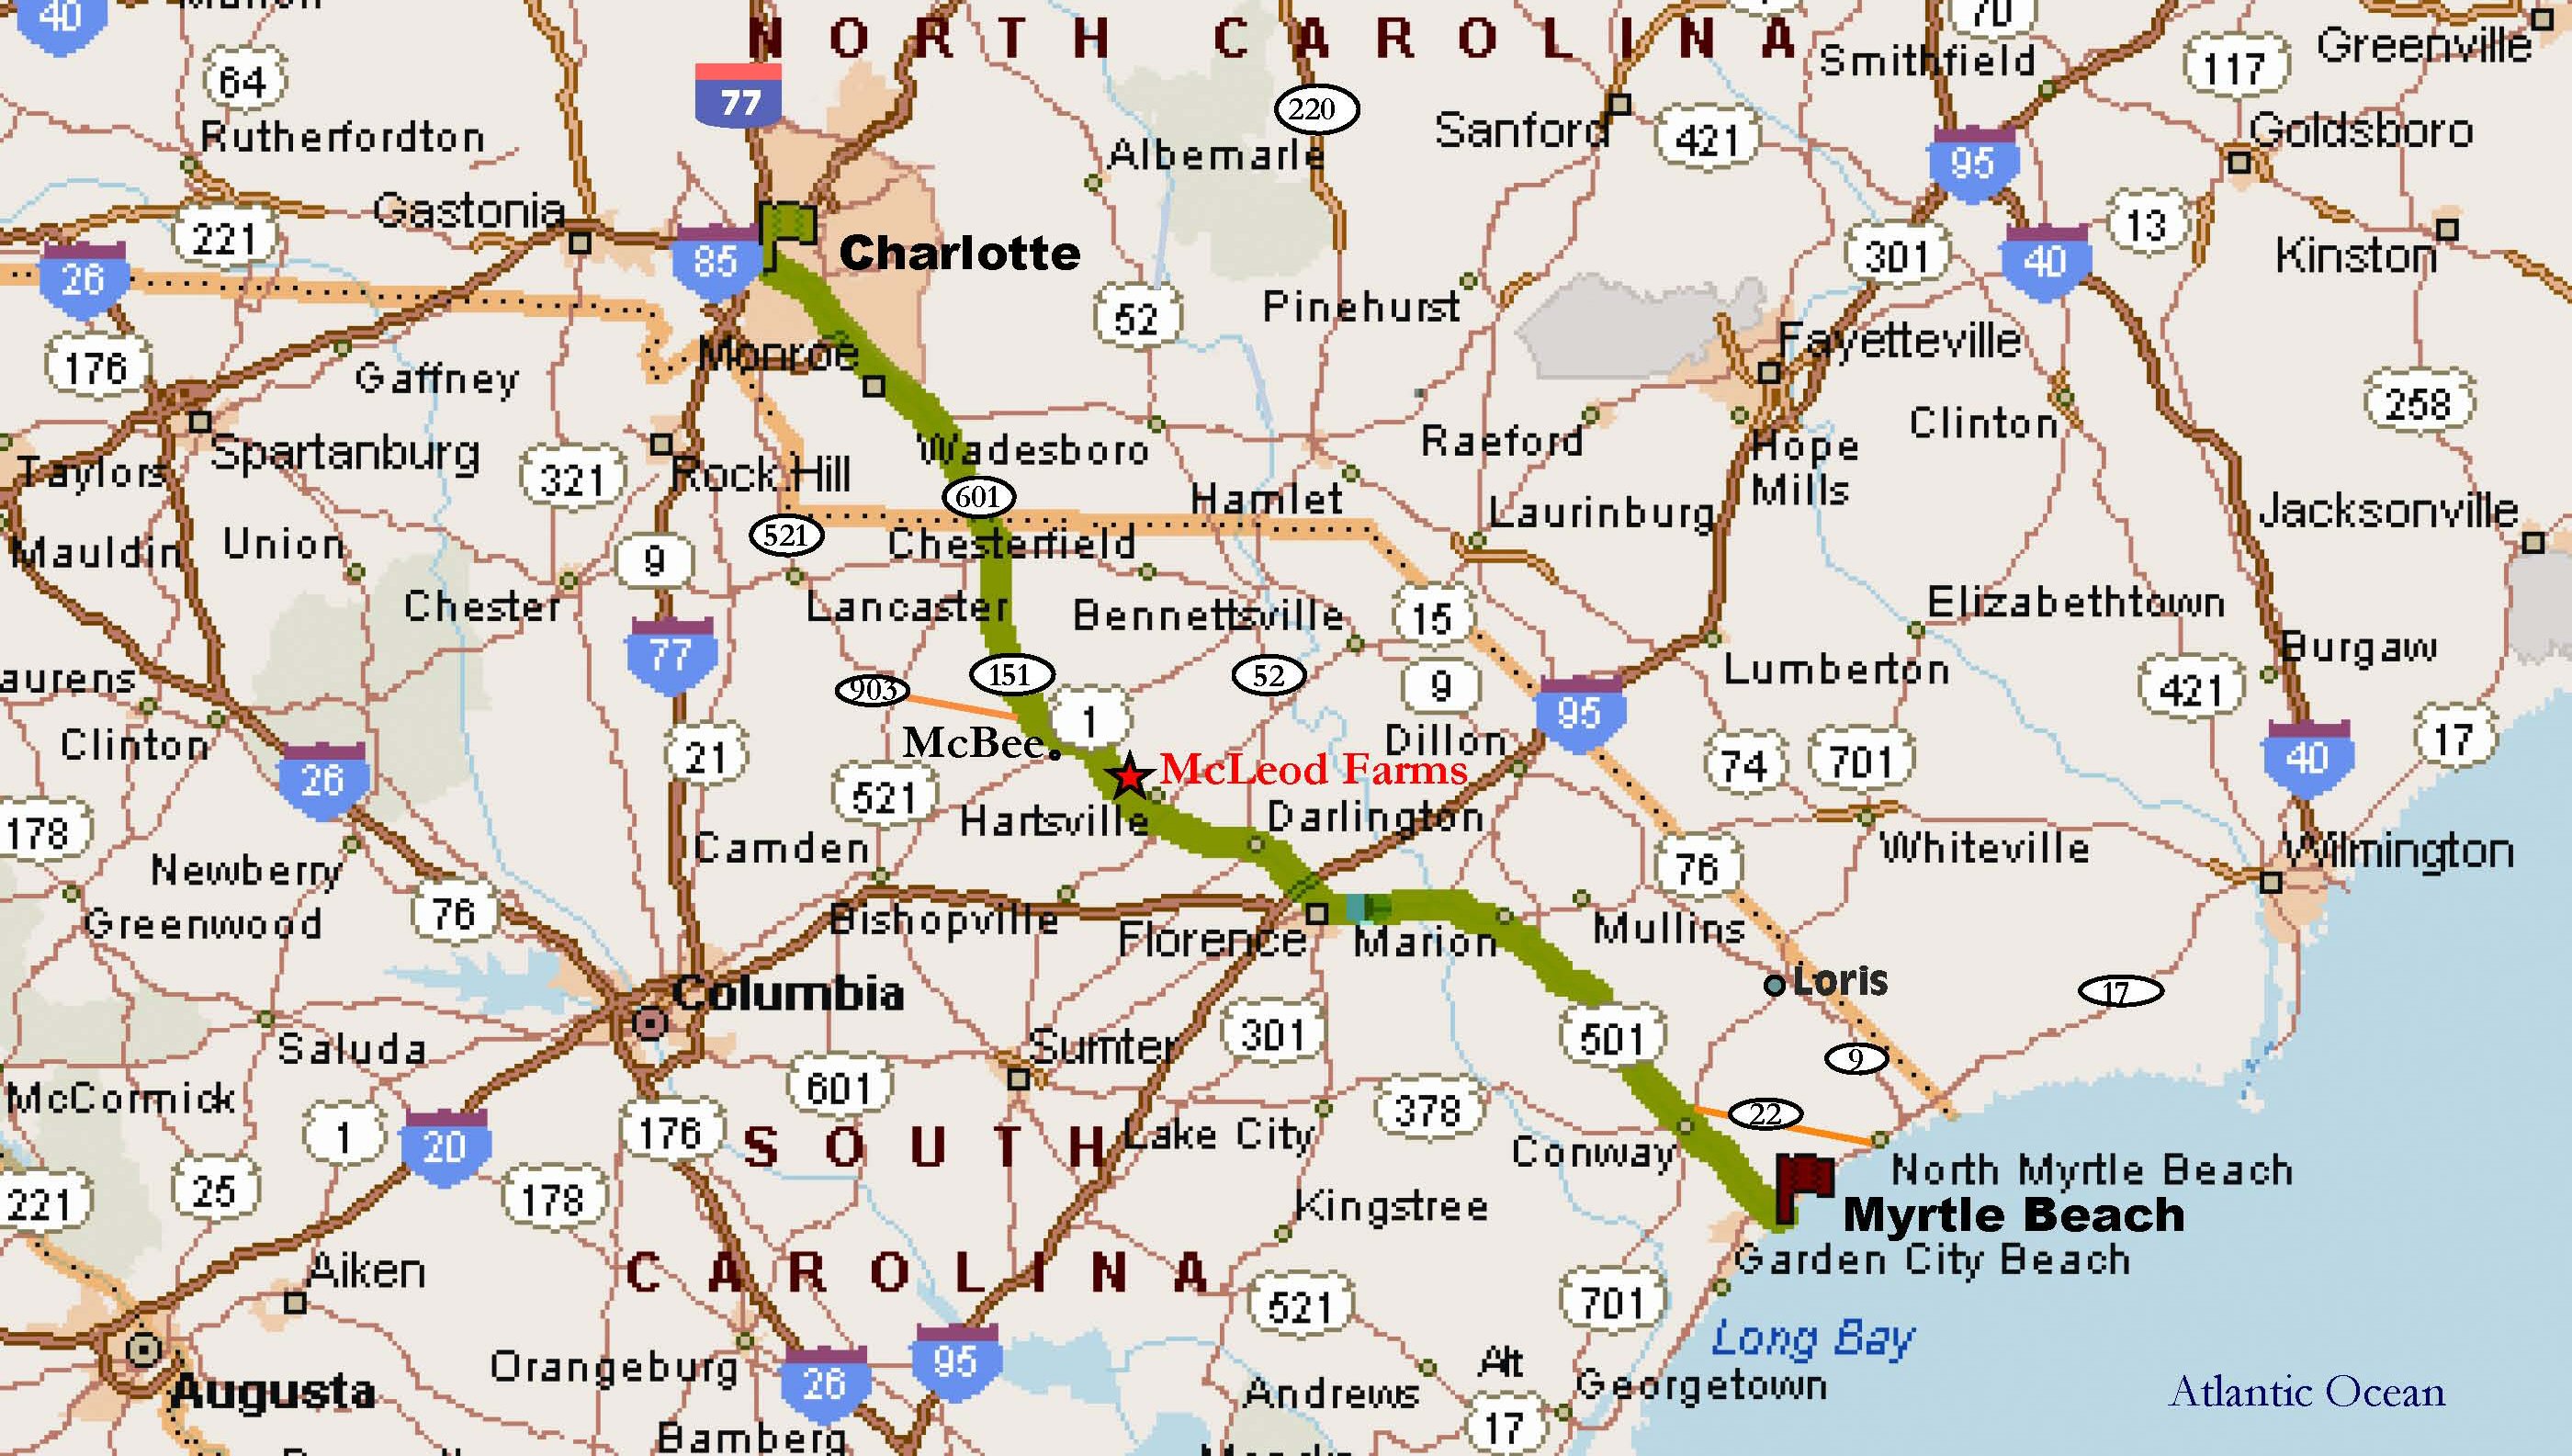 South Carolina County Map With Roads